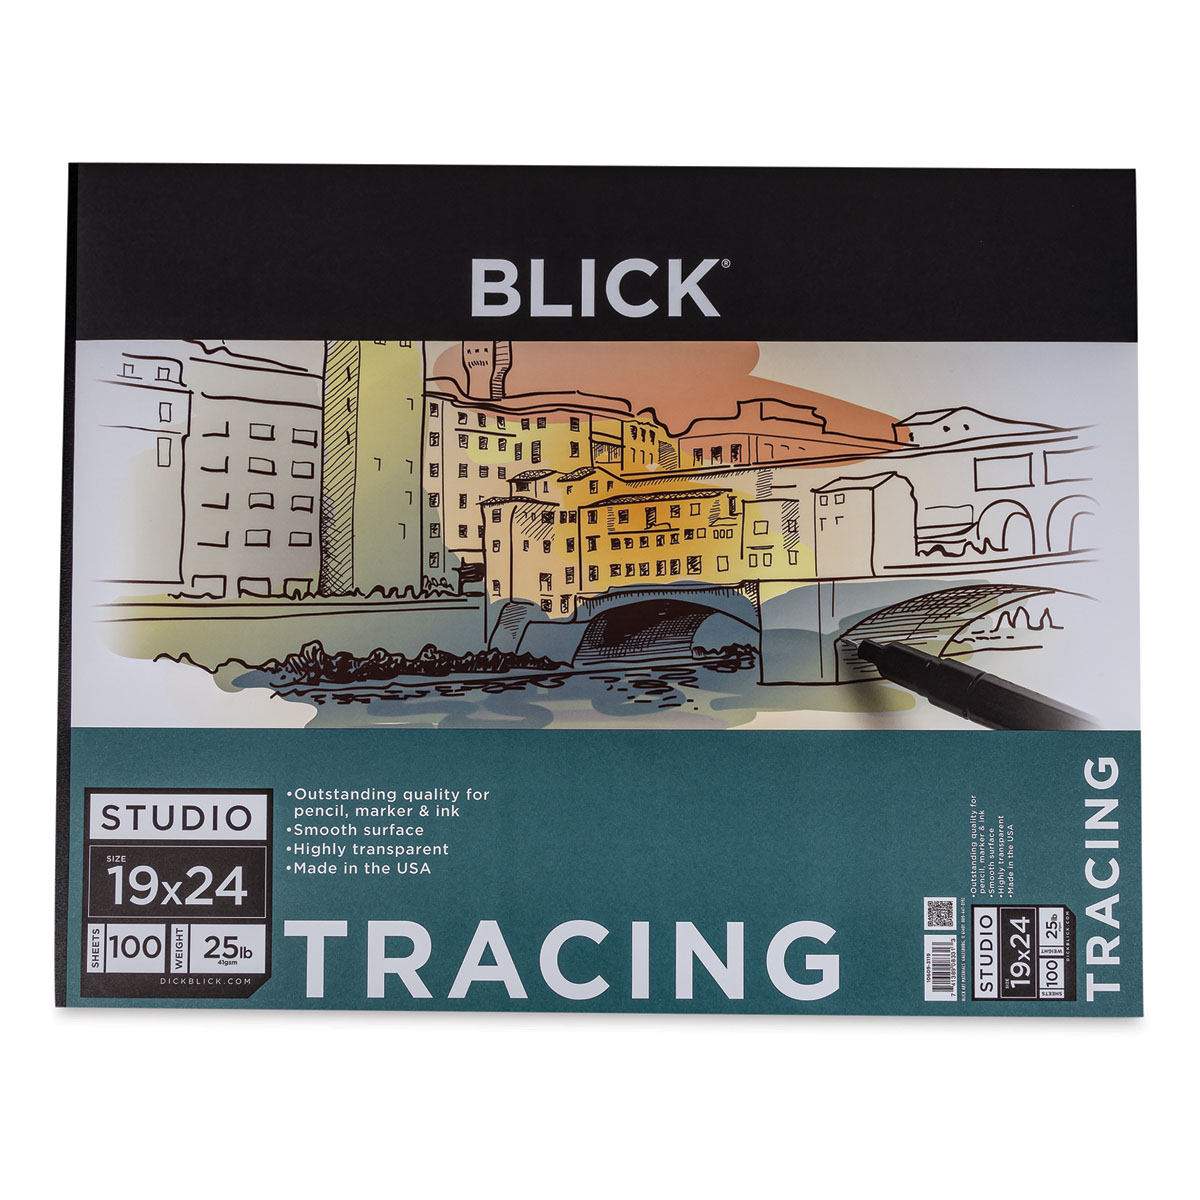 Blick Studio Tracing Paper Rolls